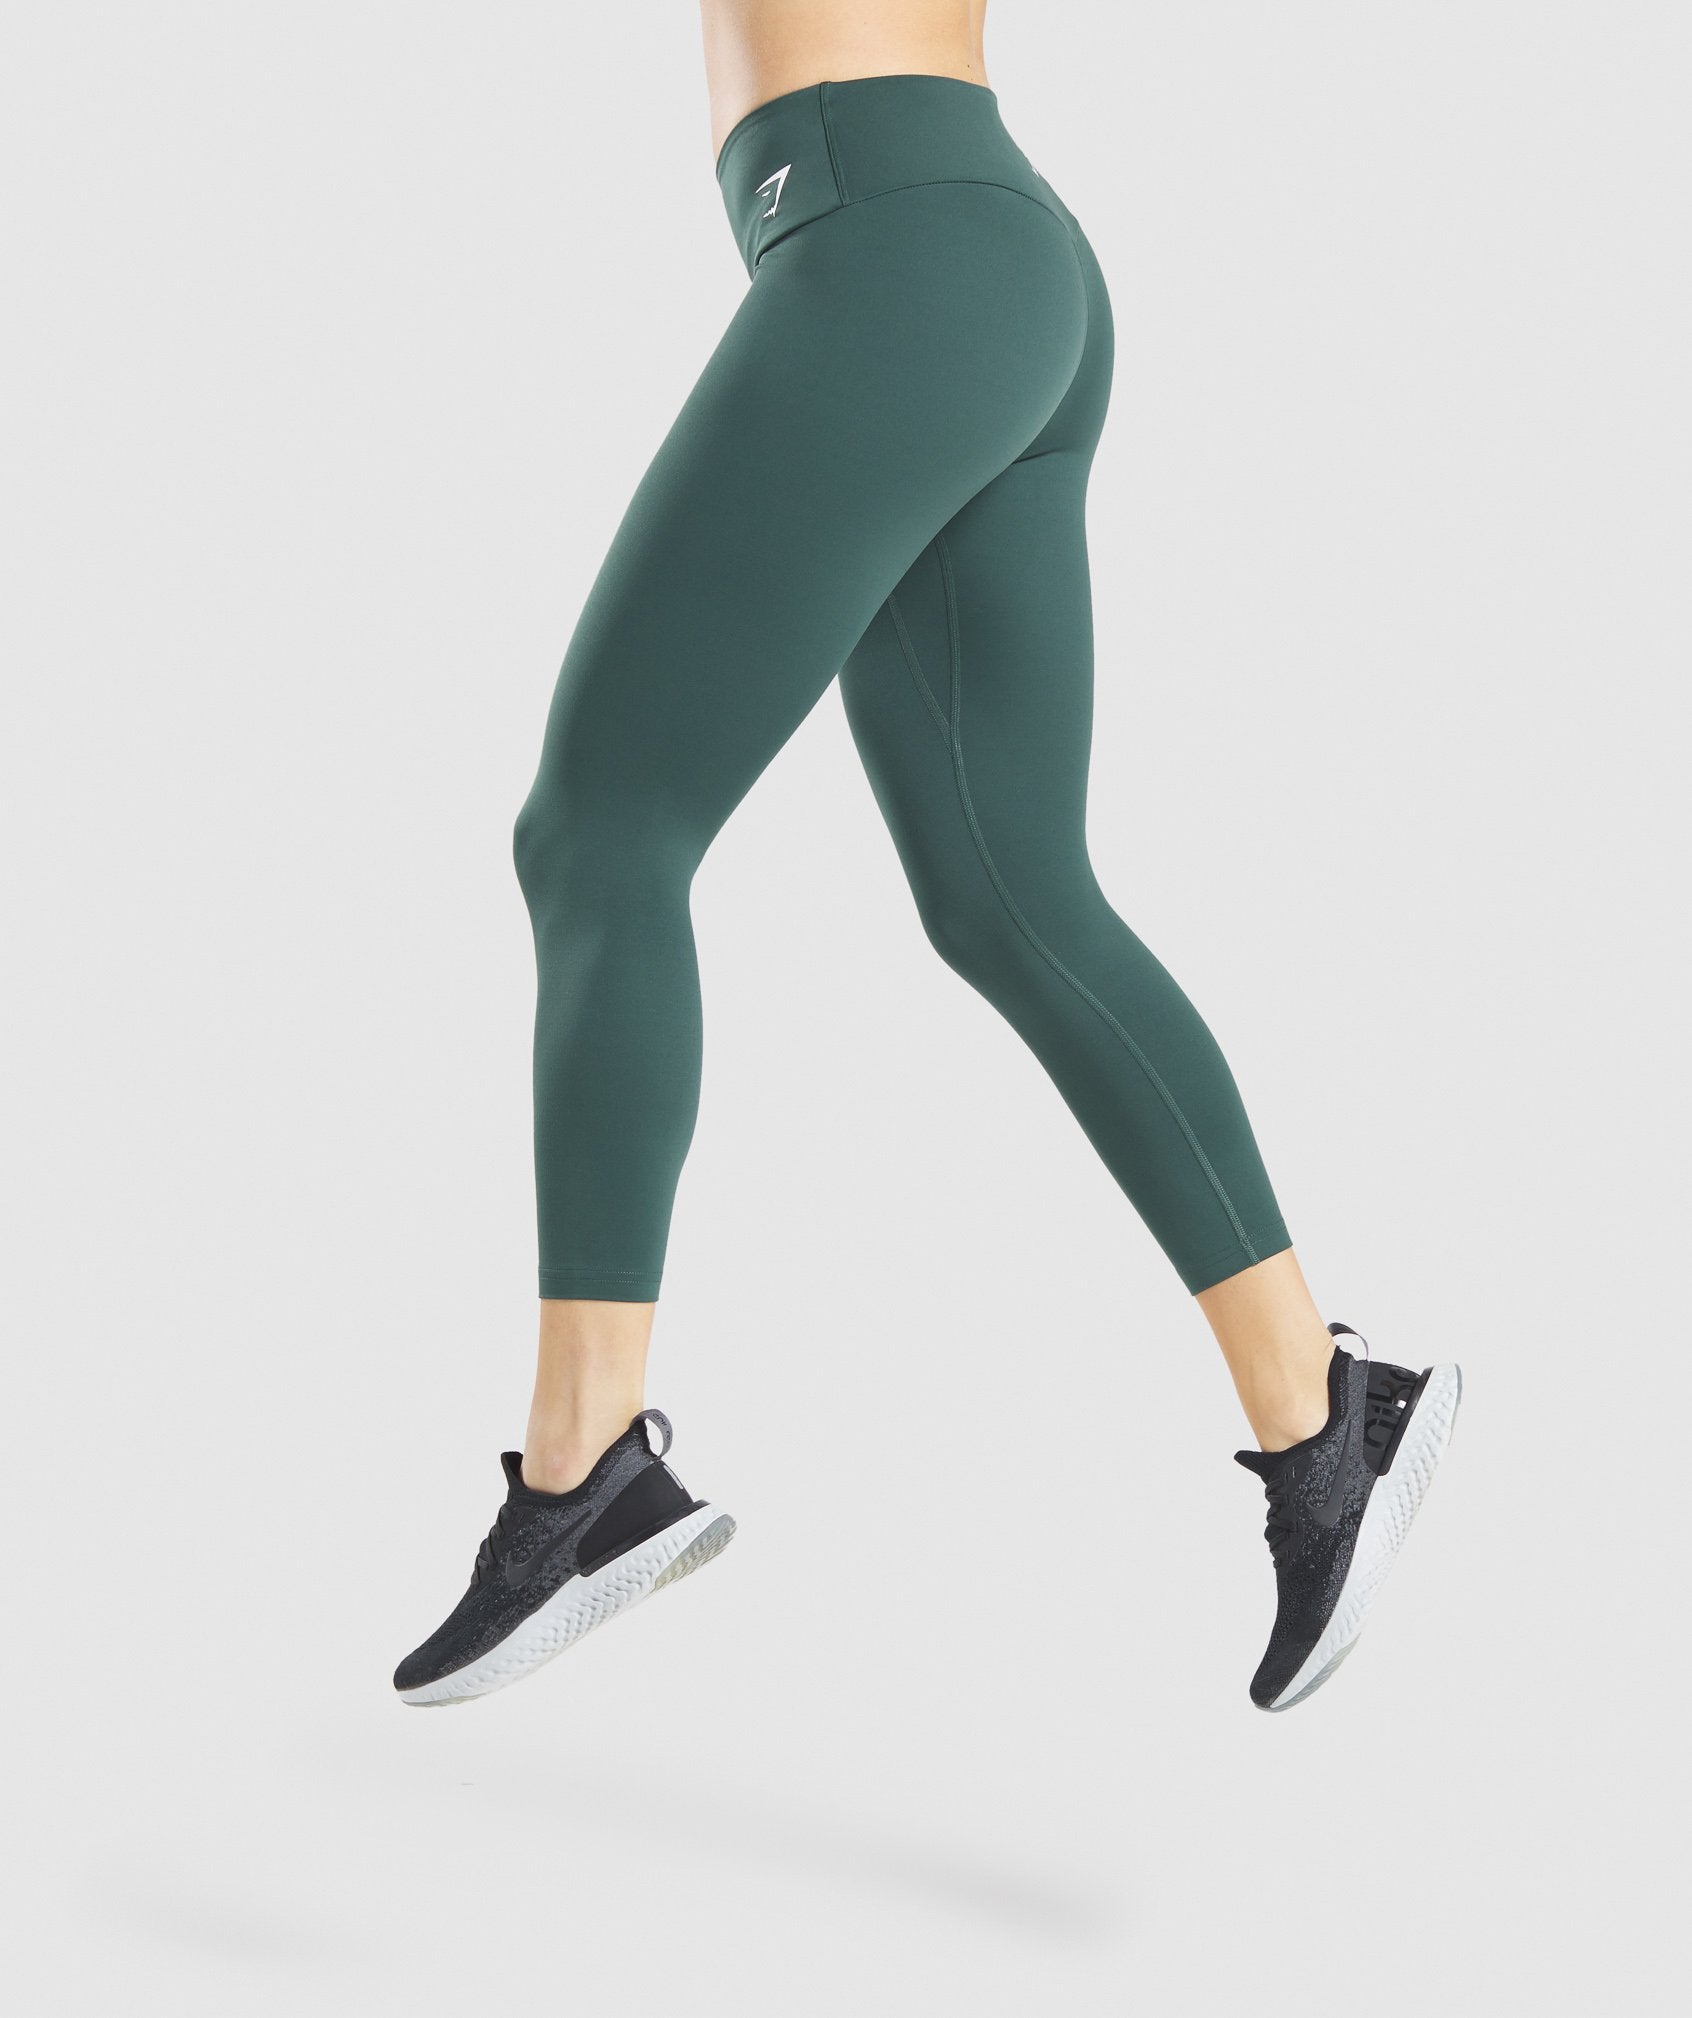 Dare 2b - Women's Influential 7/8 Gym Leggings - Lichen Green Abstract